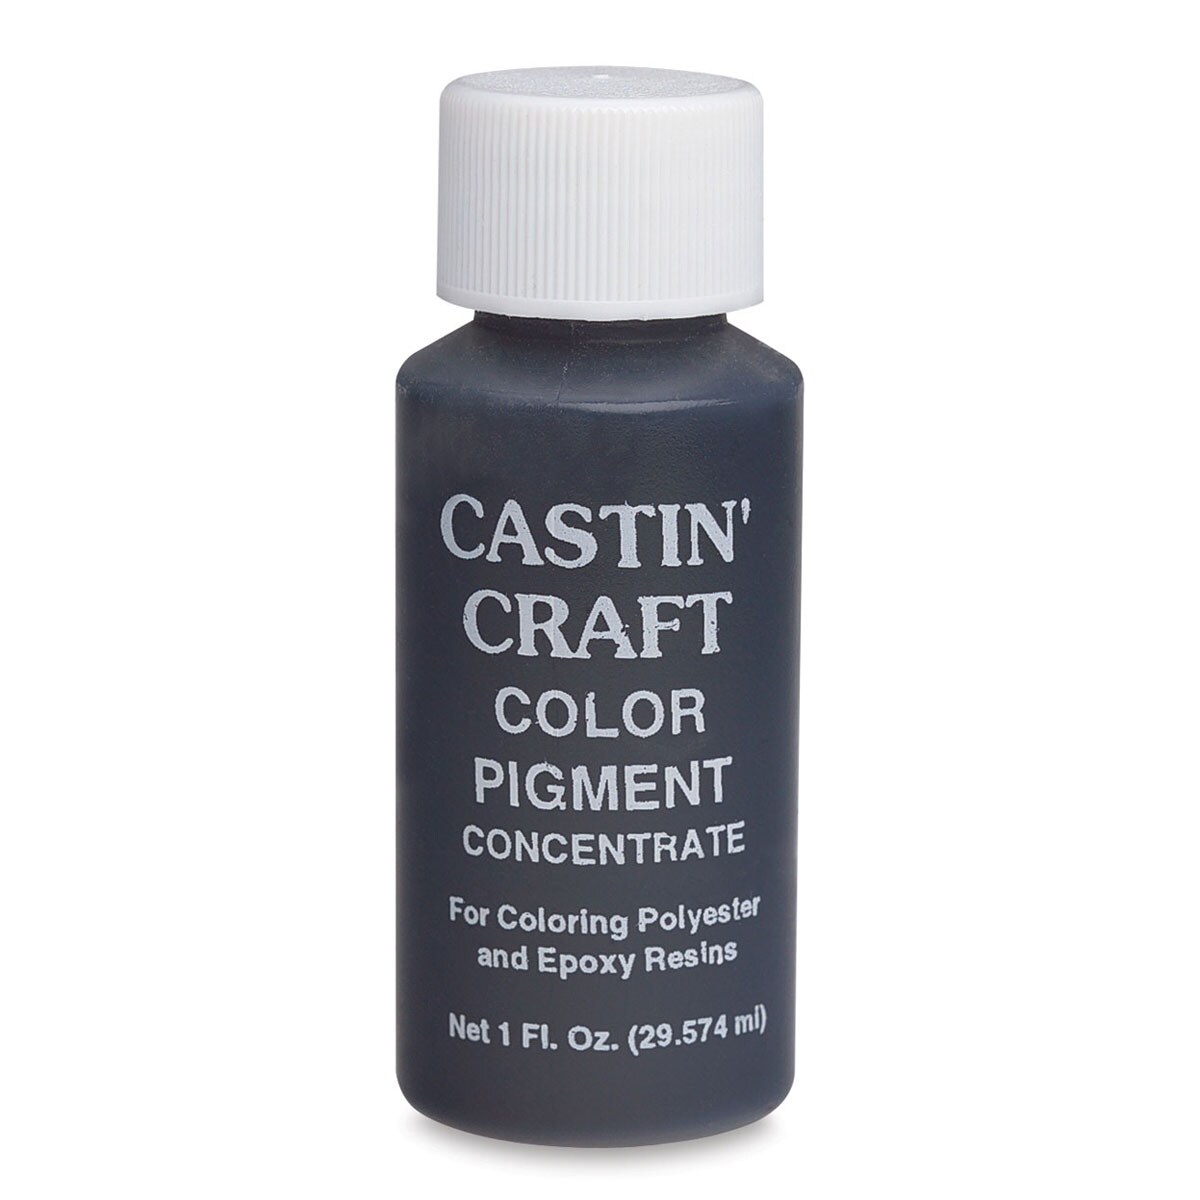 Castin'Craft Opaque Pigment - 1 oz, Green